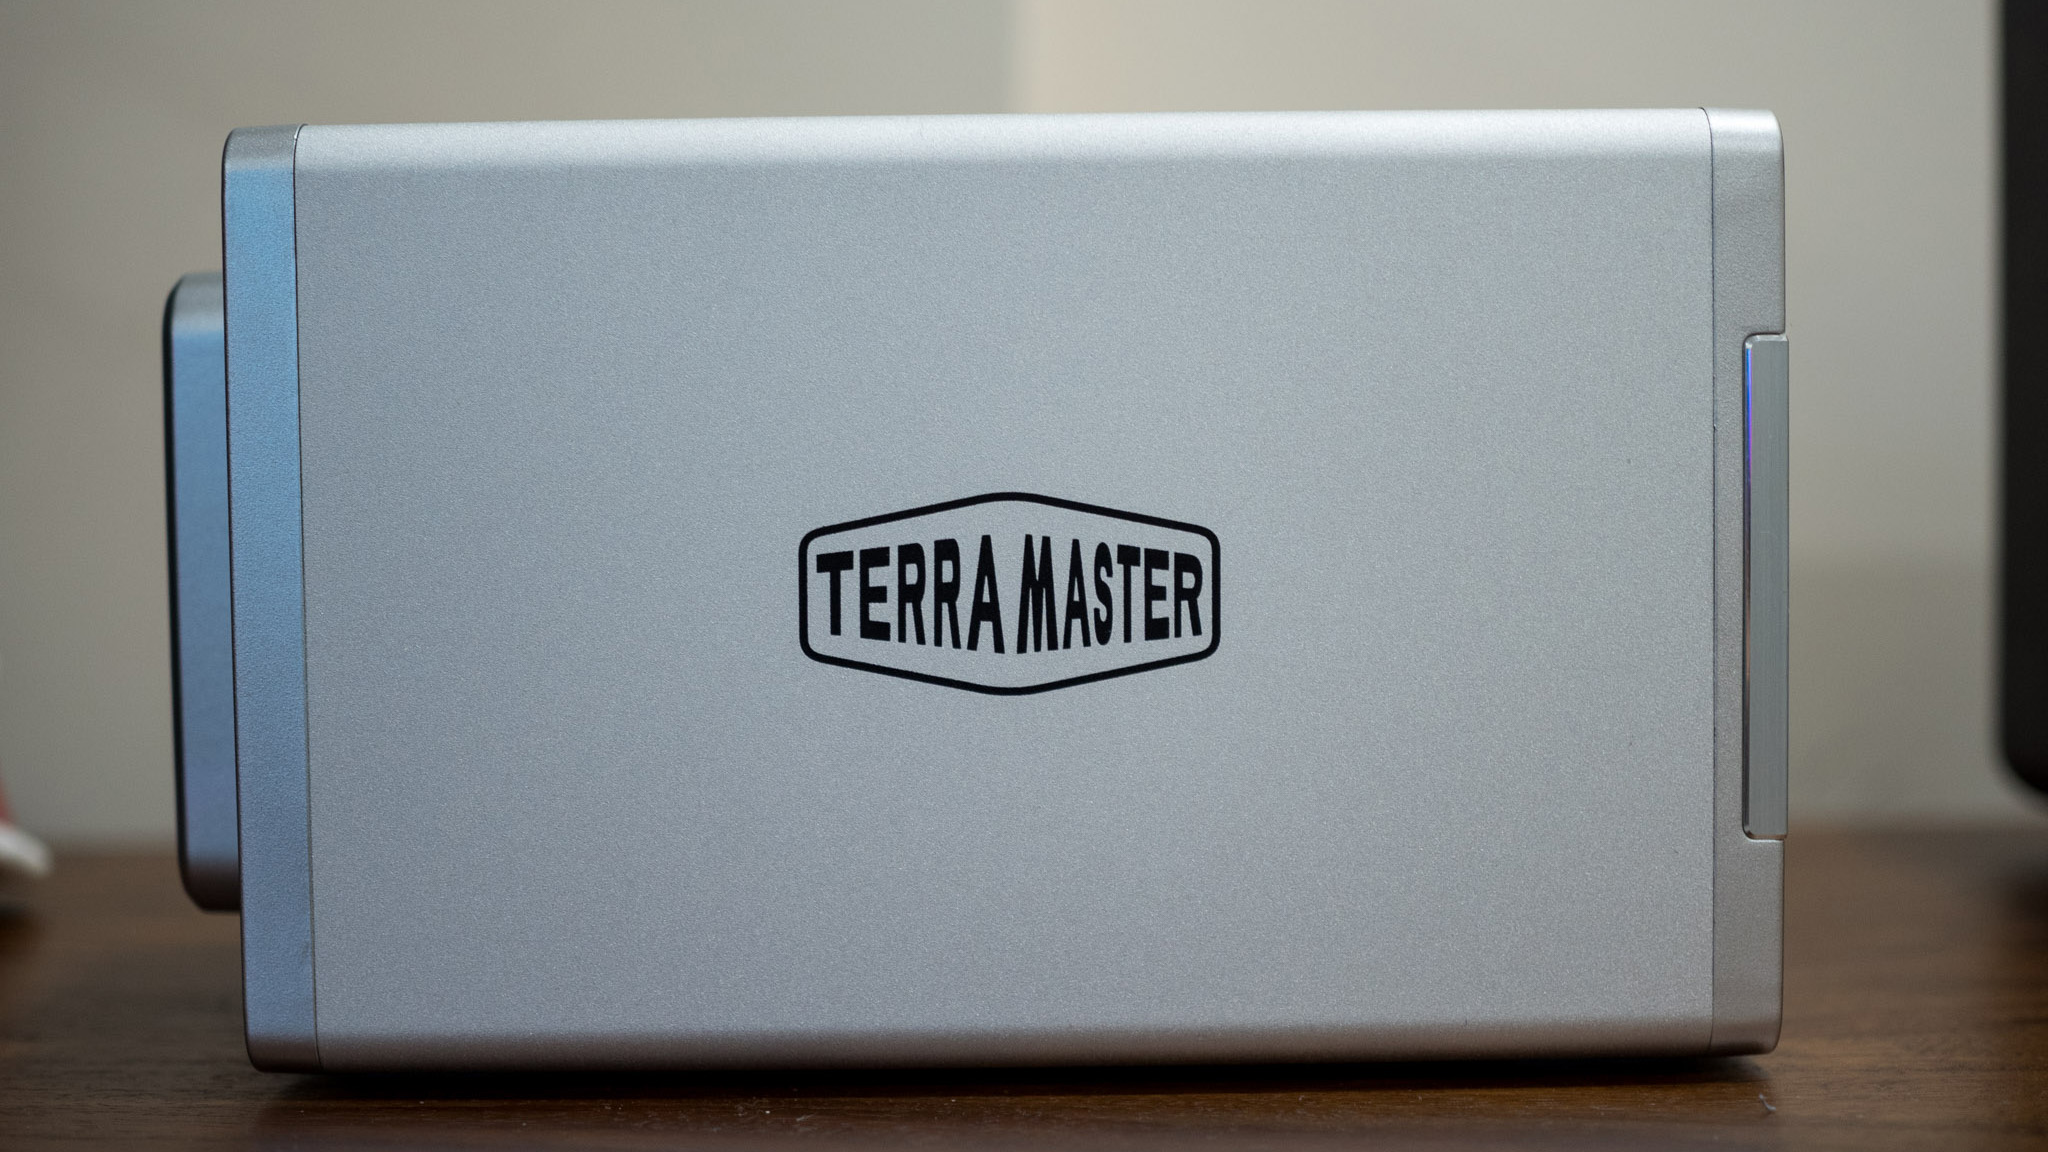 TerraMaster logo on the side